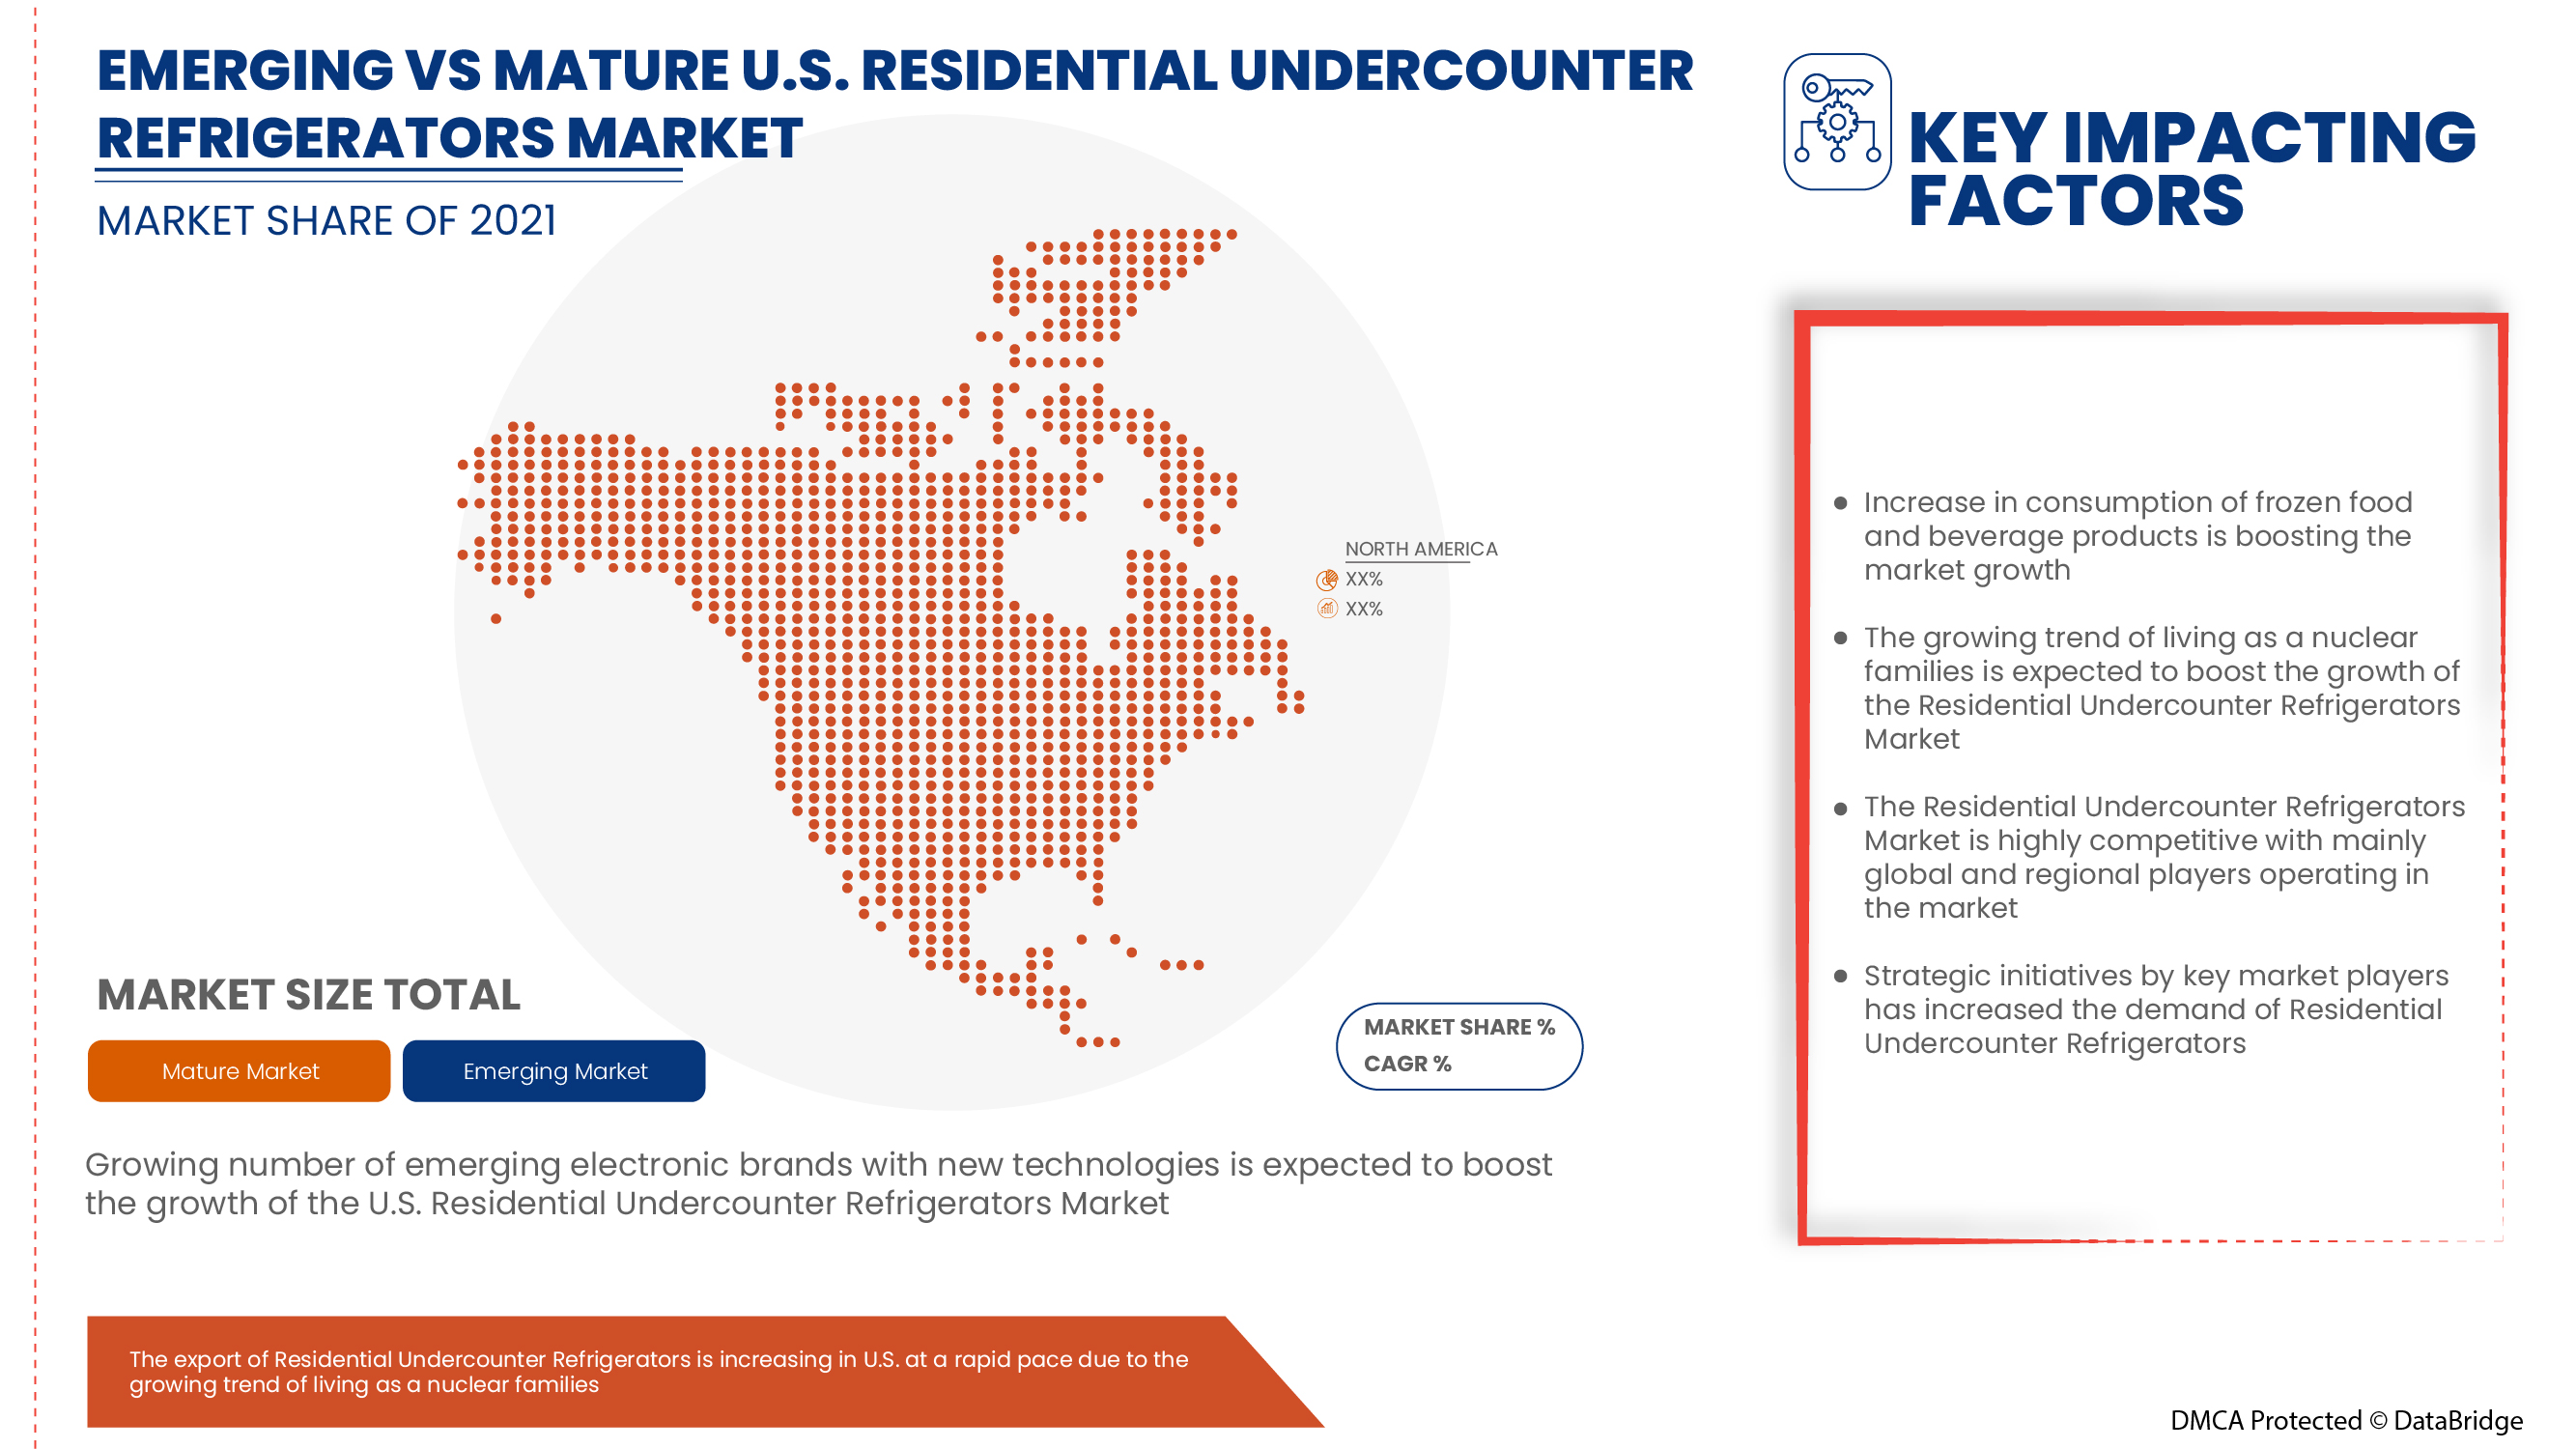 U.S. Residential Undercounter Refrigerators Market